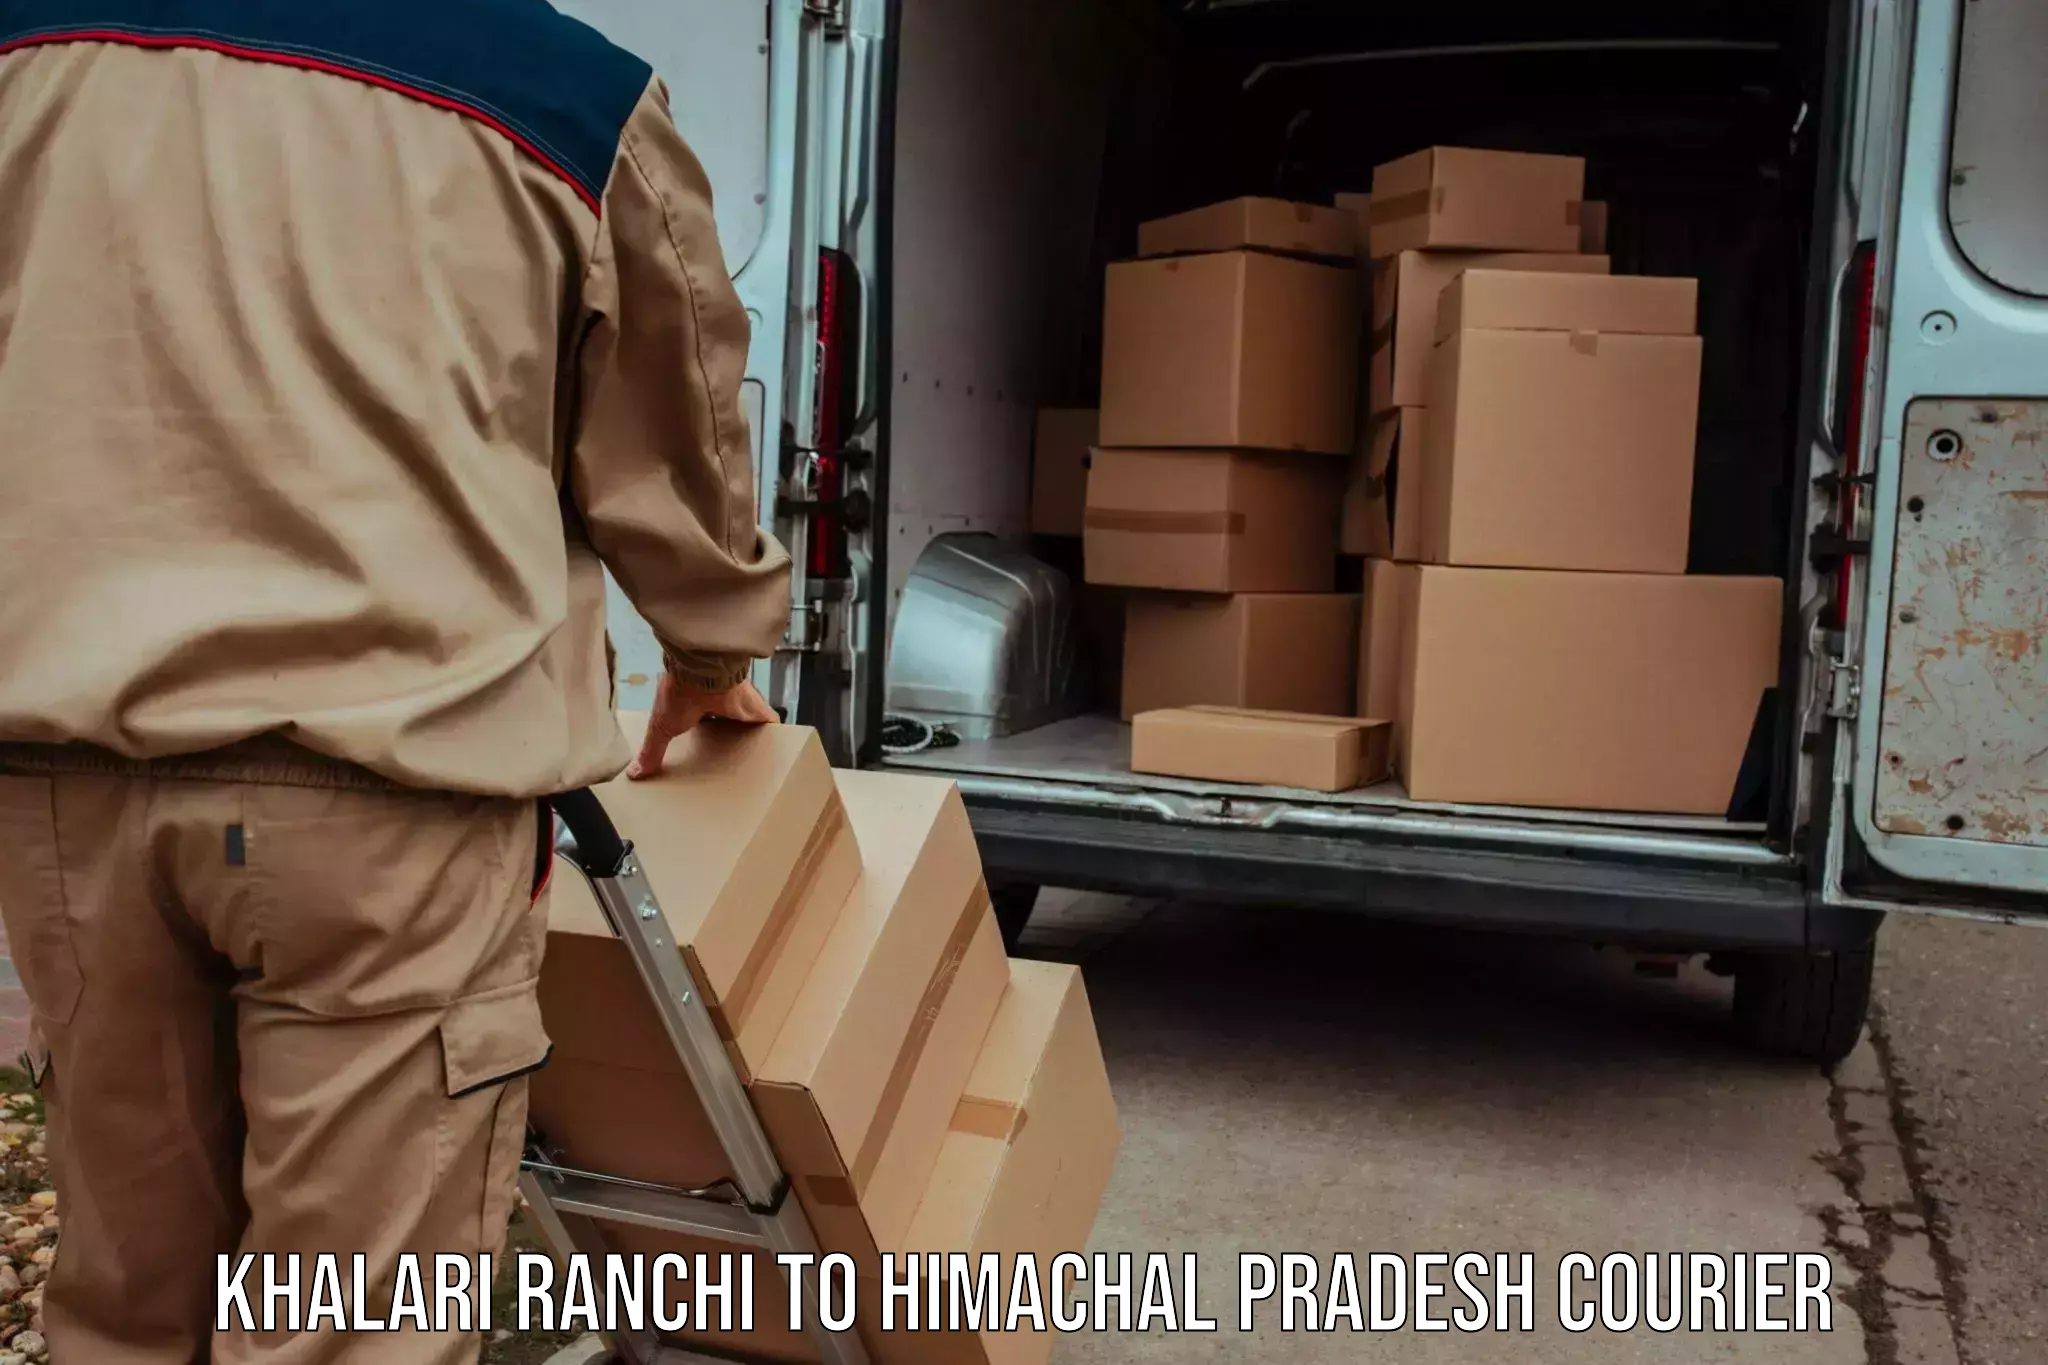 Next-day delivery options Khalari Ranchi to Solan